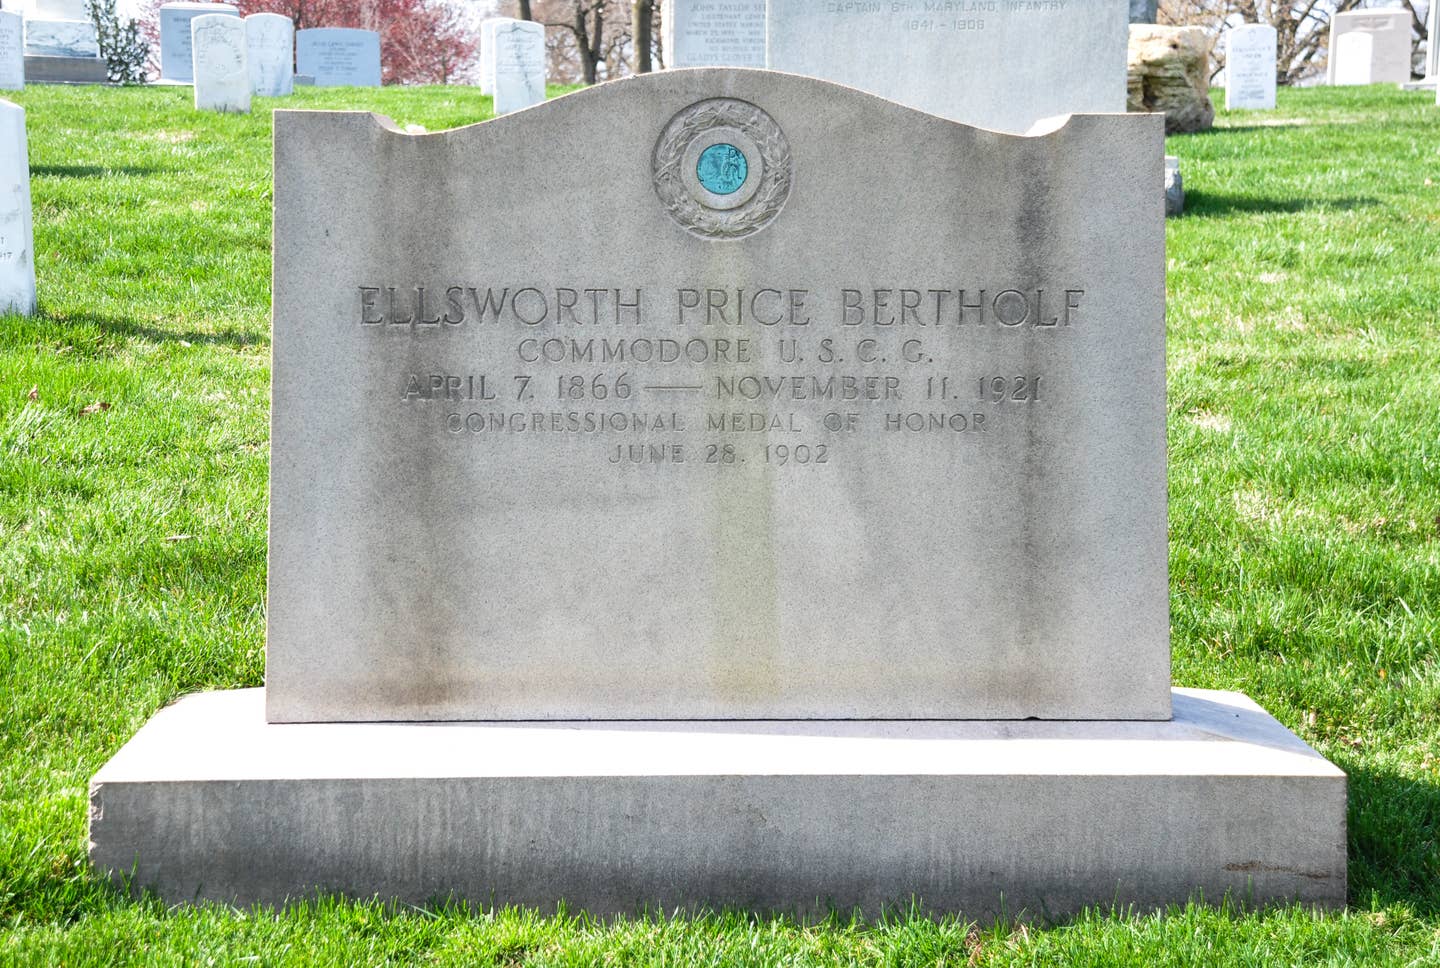 Bertholf gravesite located at Arlington National Cemetery.